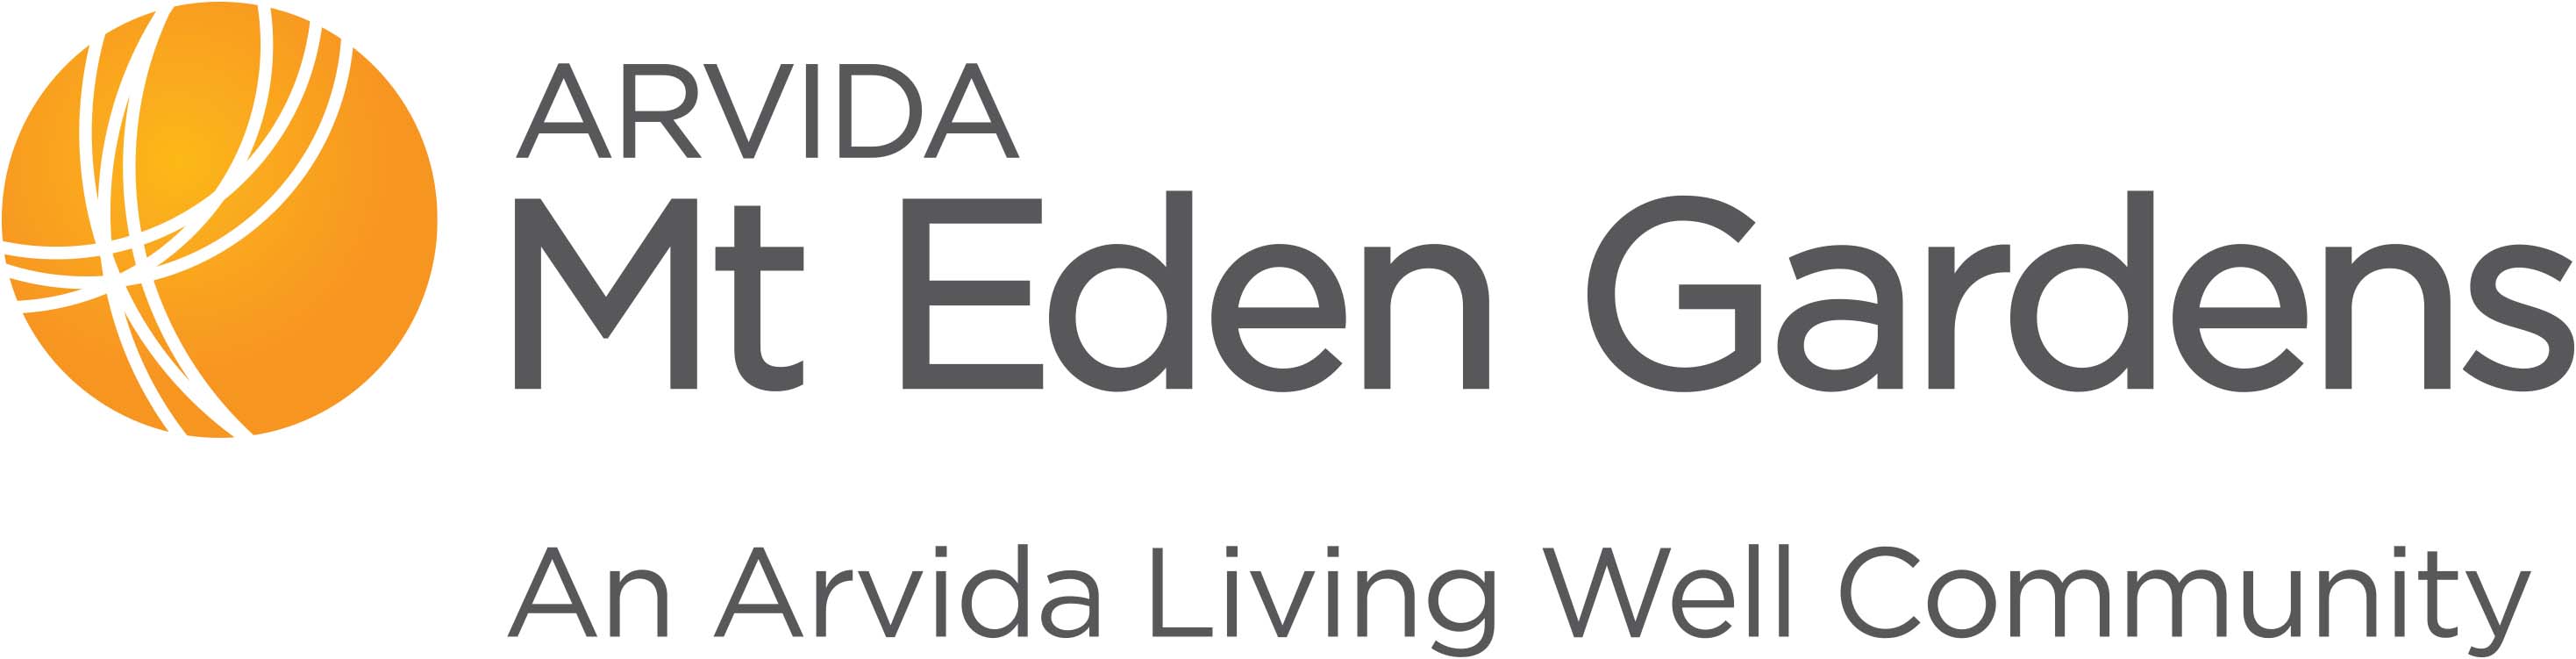 Mt Eden Gardens | Arvida logo